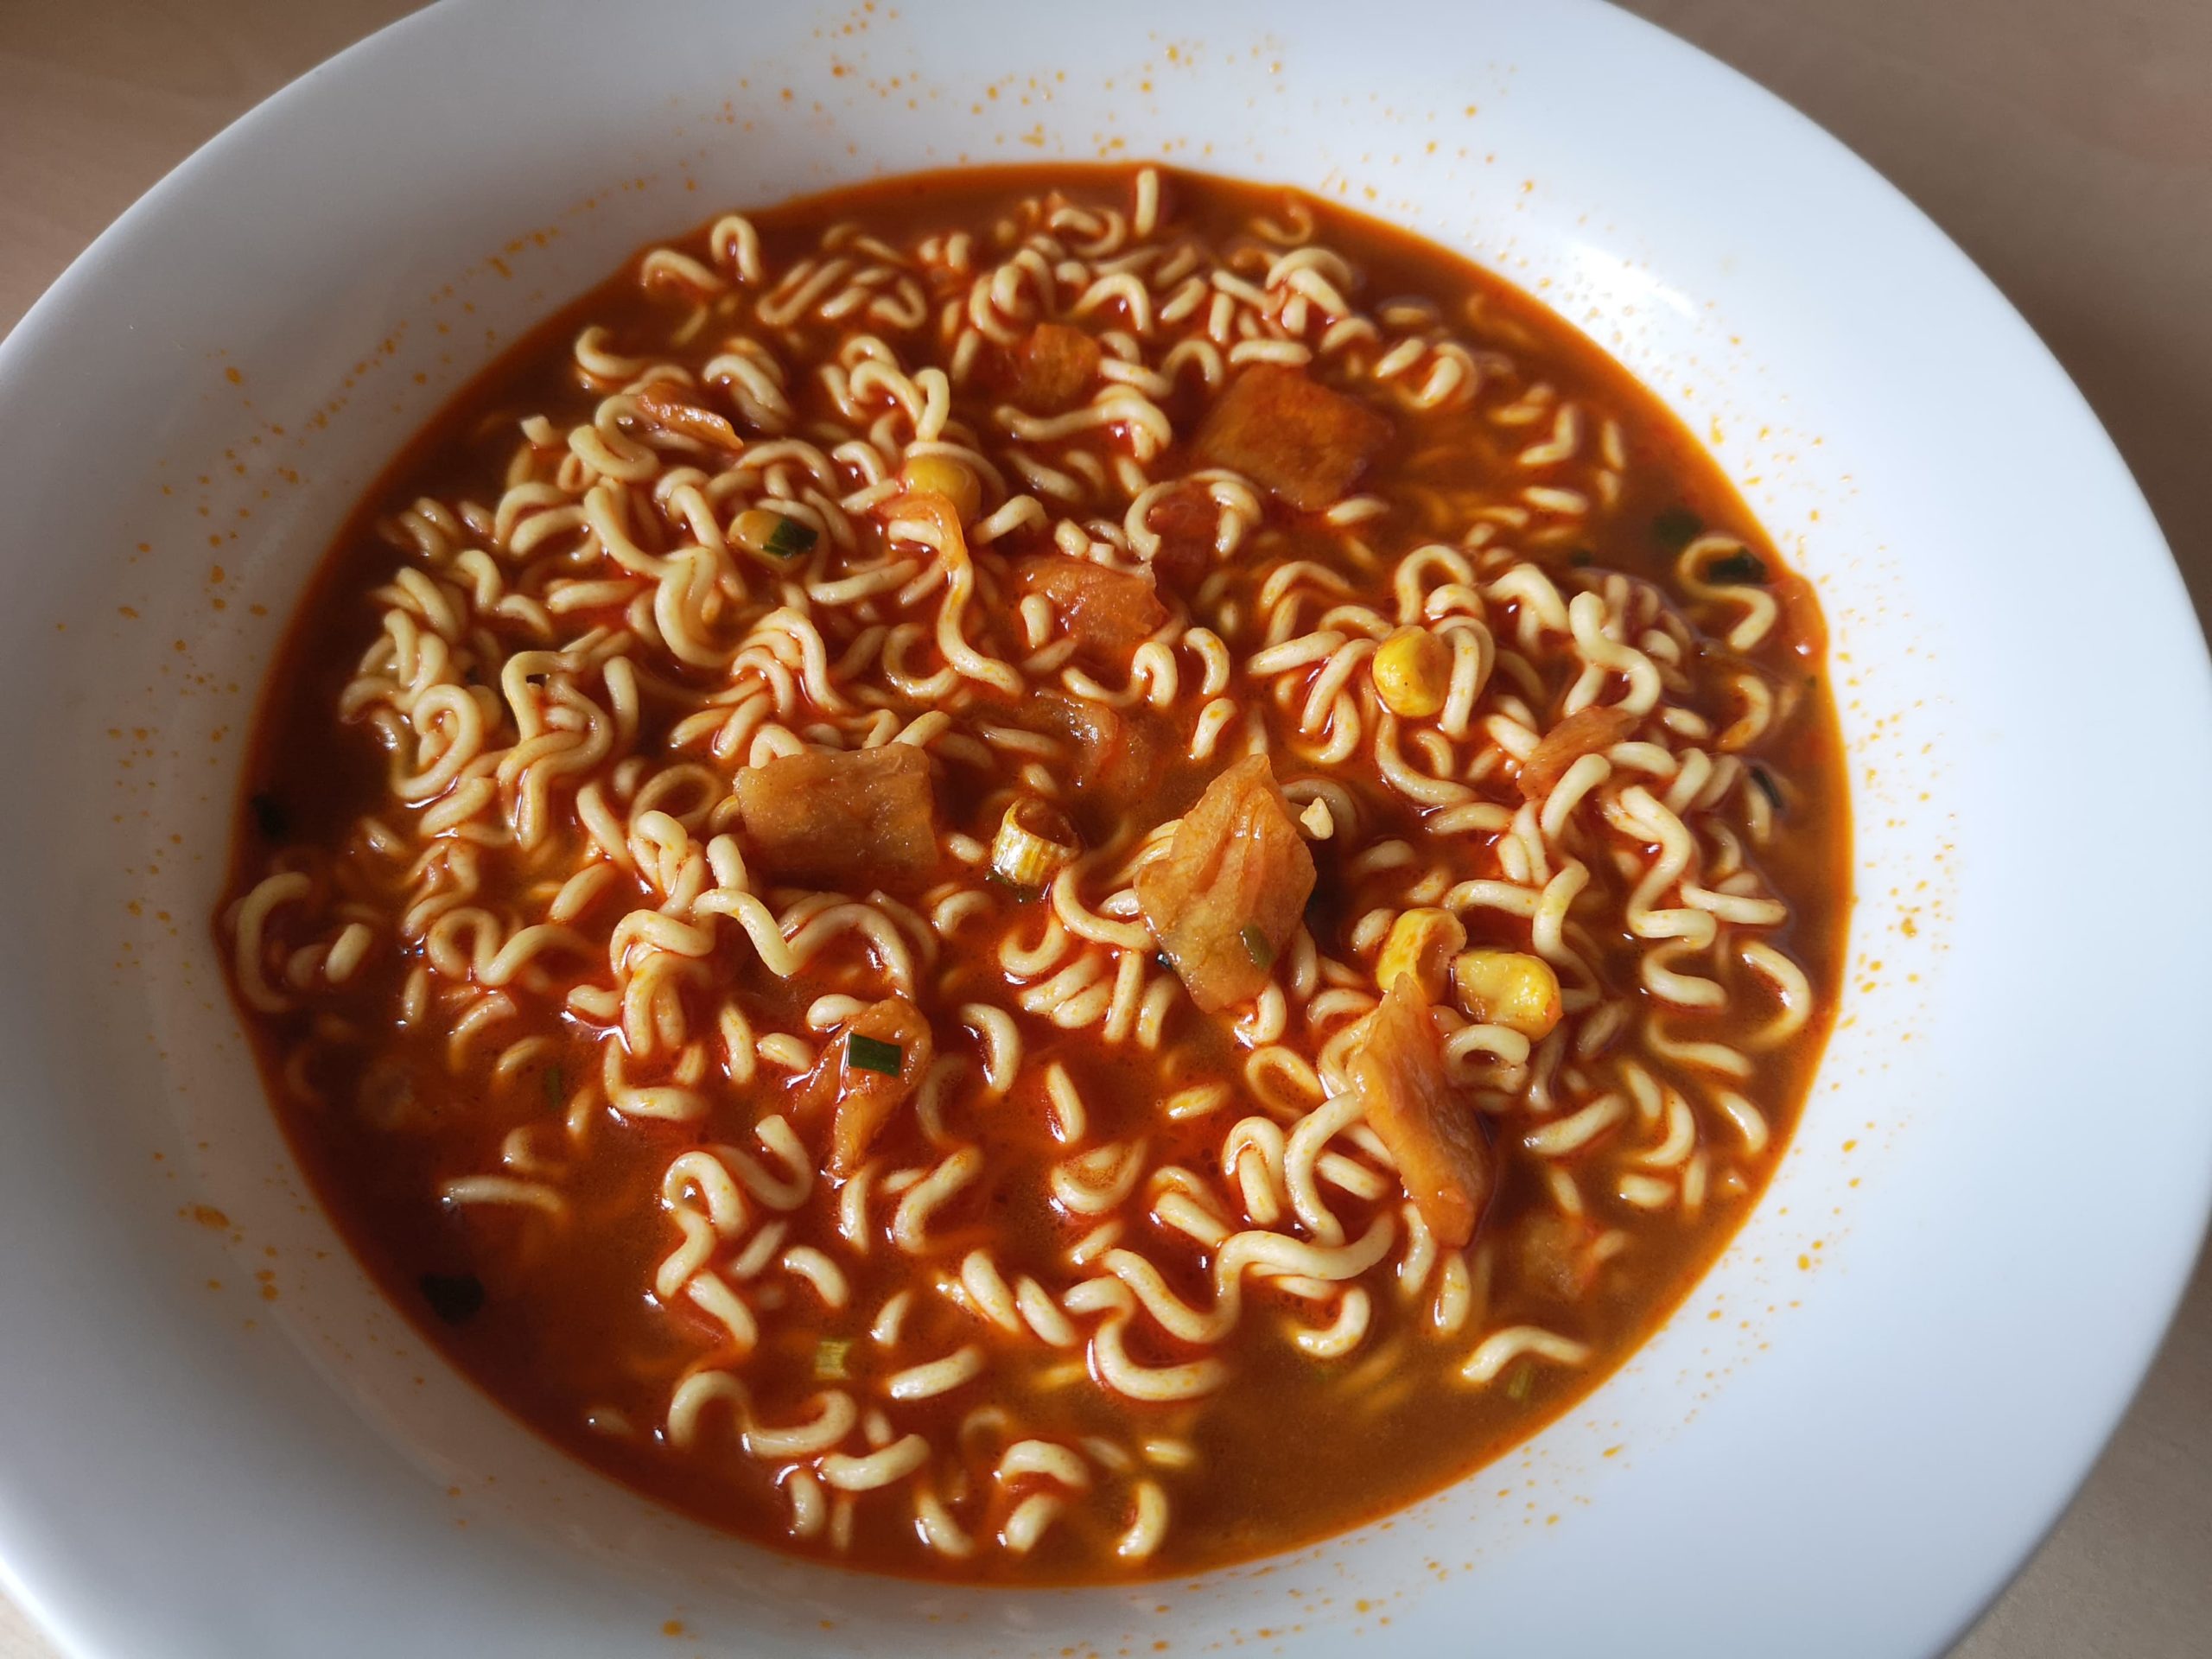 #1817: Unif Tangdaren Instant Noodles "Beef Taste Spicy Korean Style"